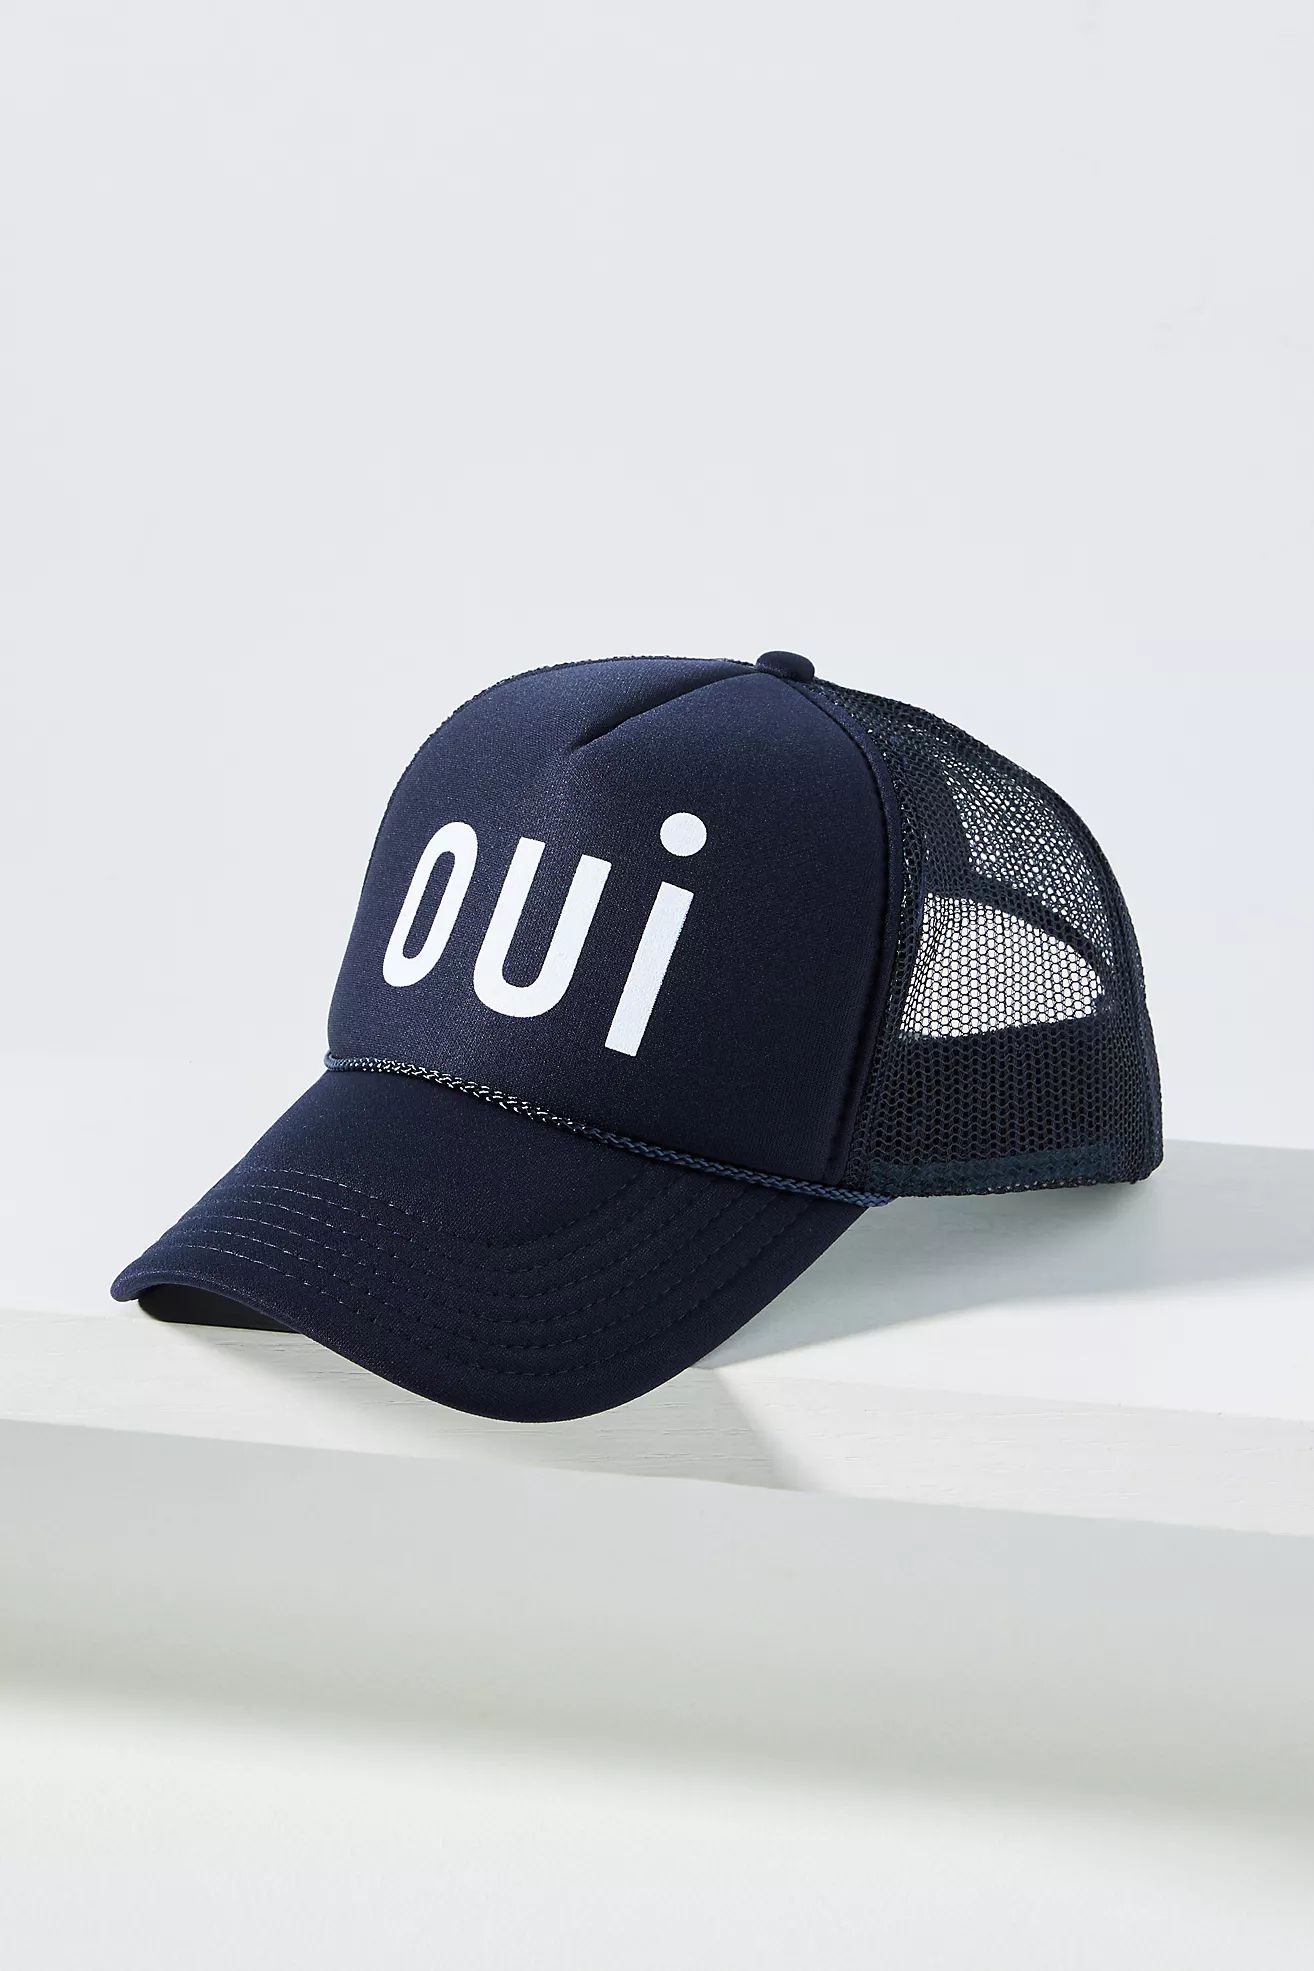 Clare V. Oui Trucker Hat | Anthropologie (US)